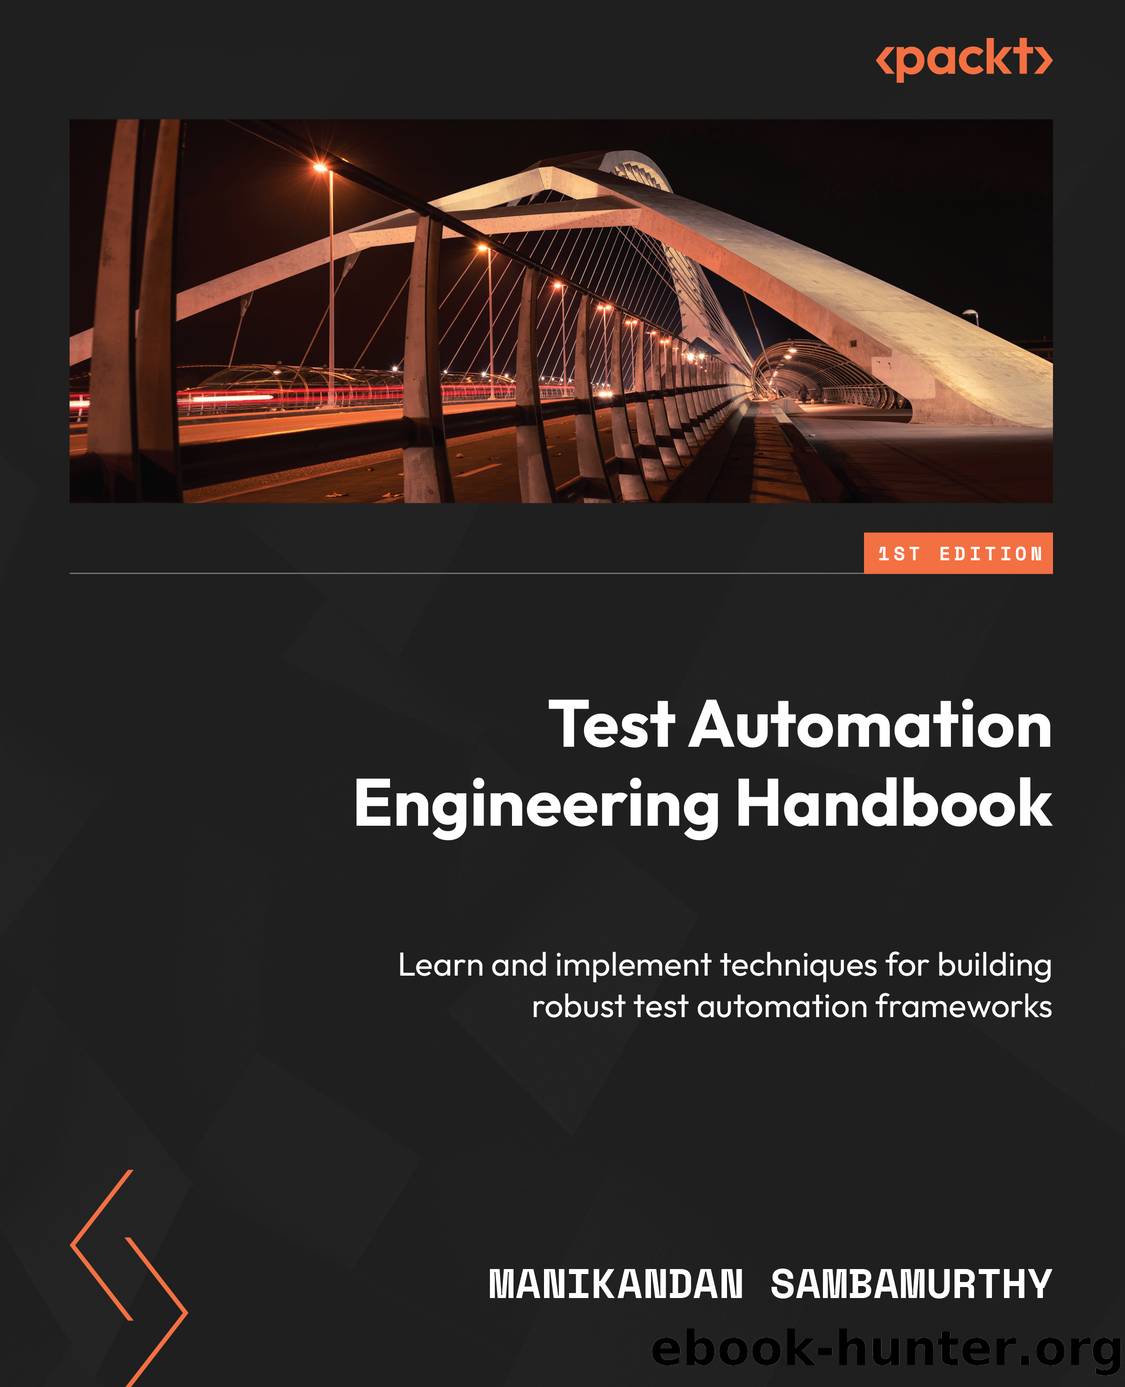 Test Automation Engineering Handbook by Manikandan Sambamurthy